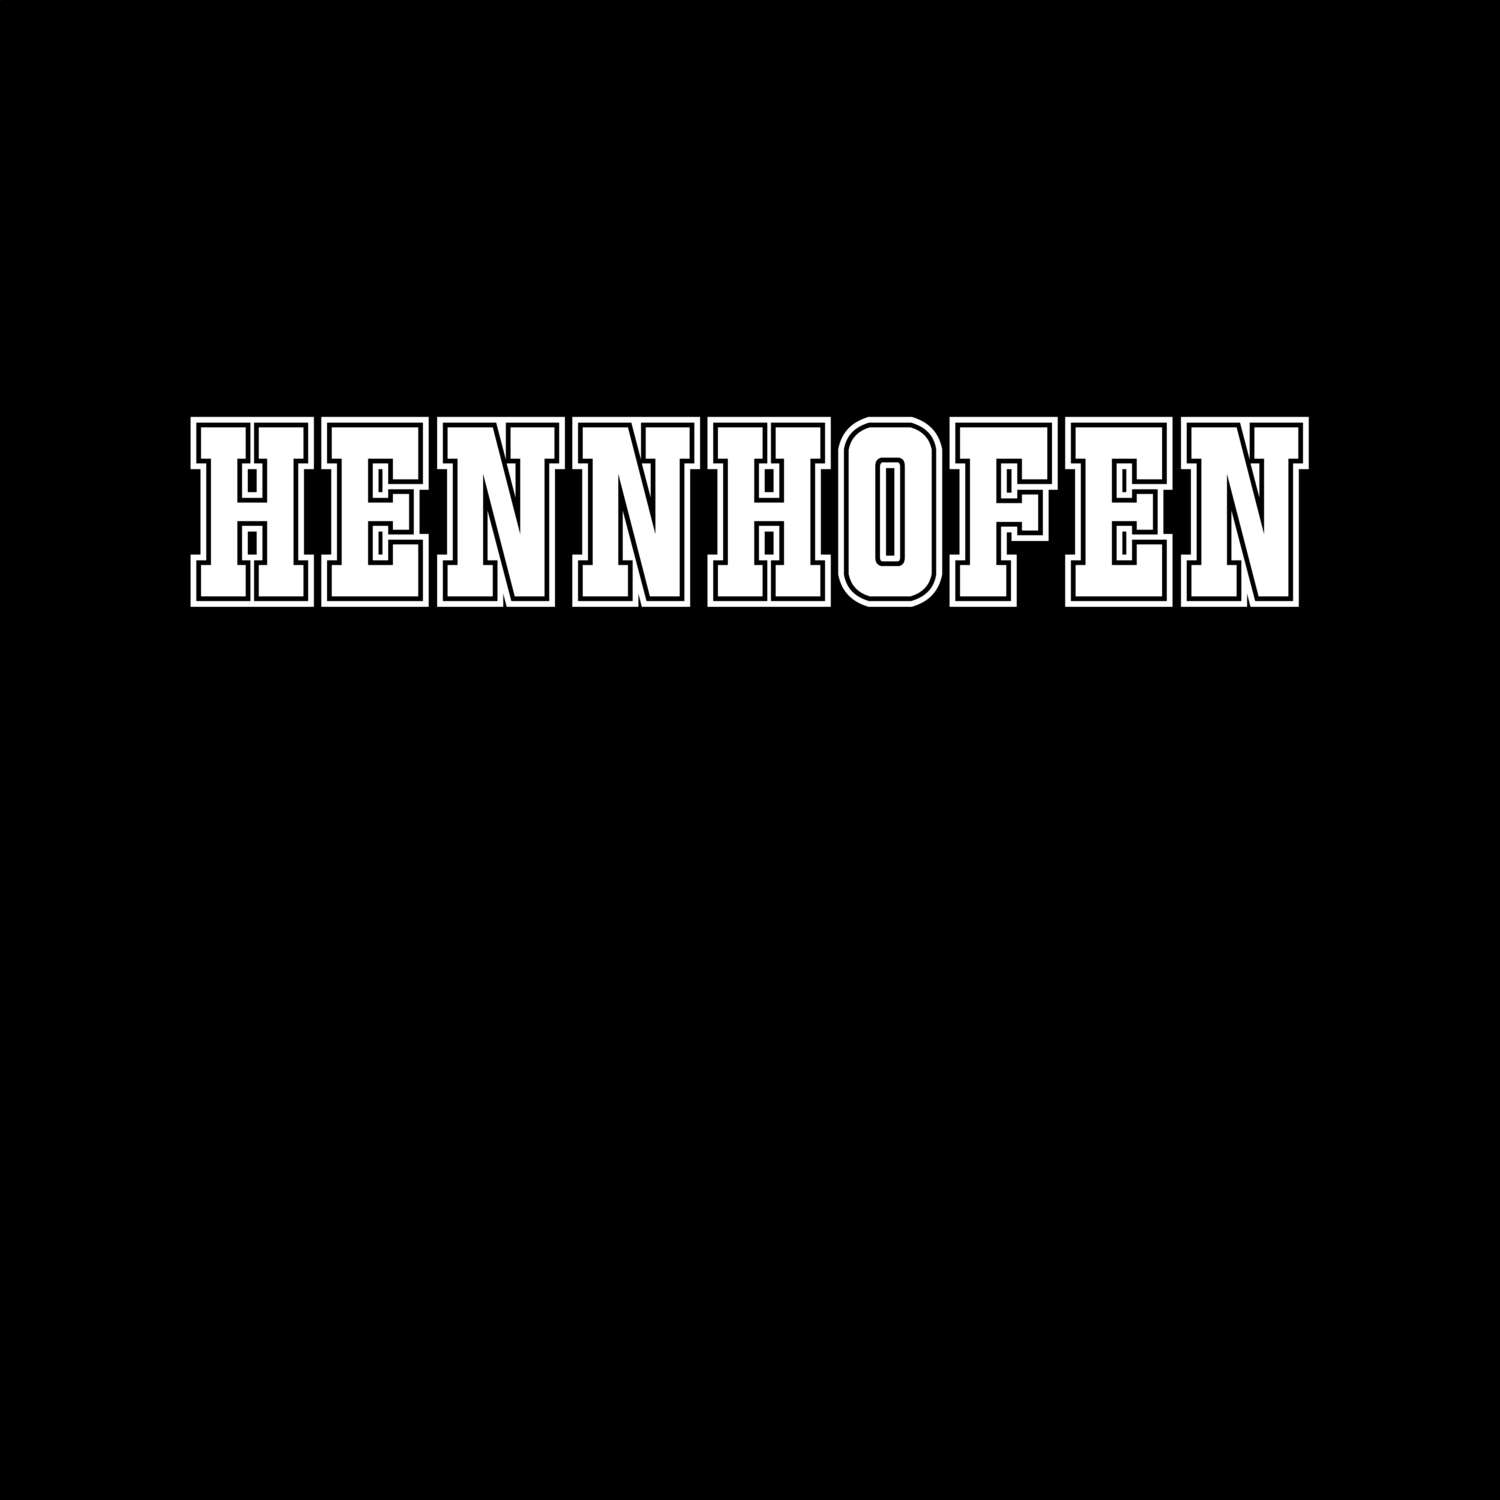 Hennhofen T-Shirt »Classic«